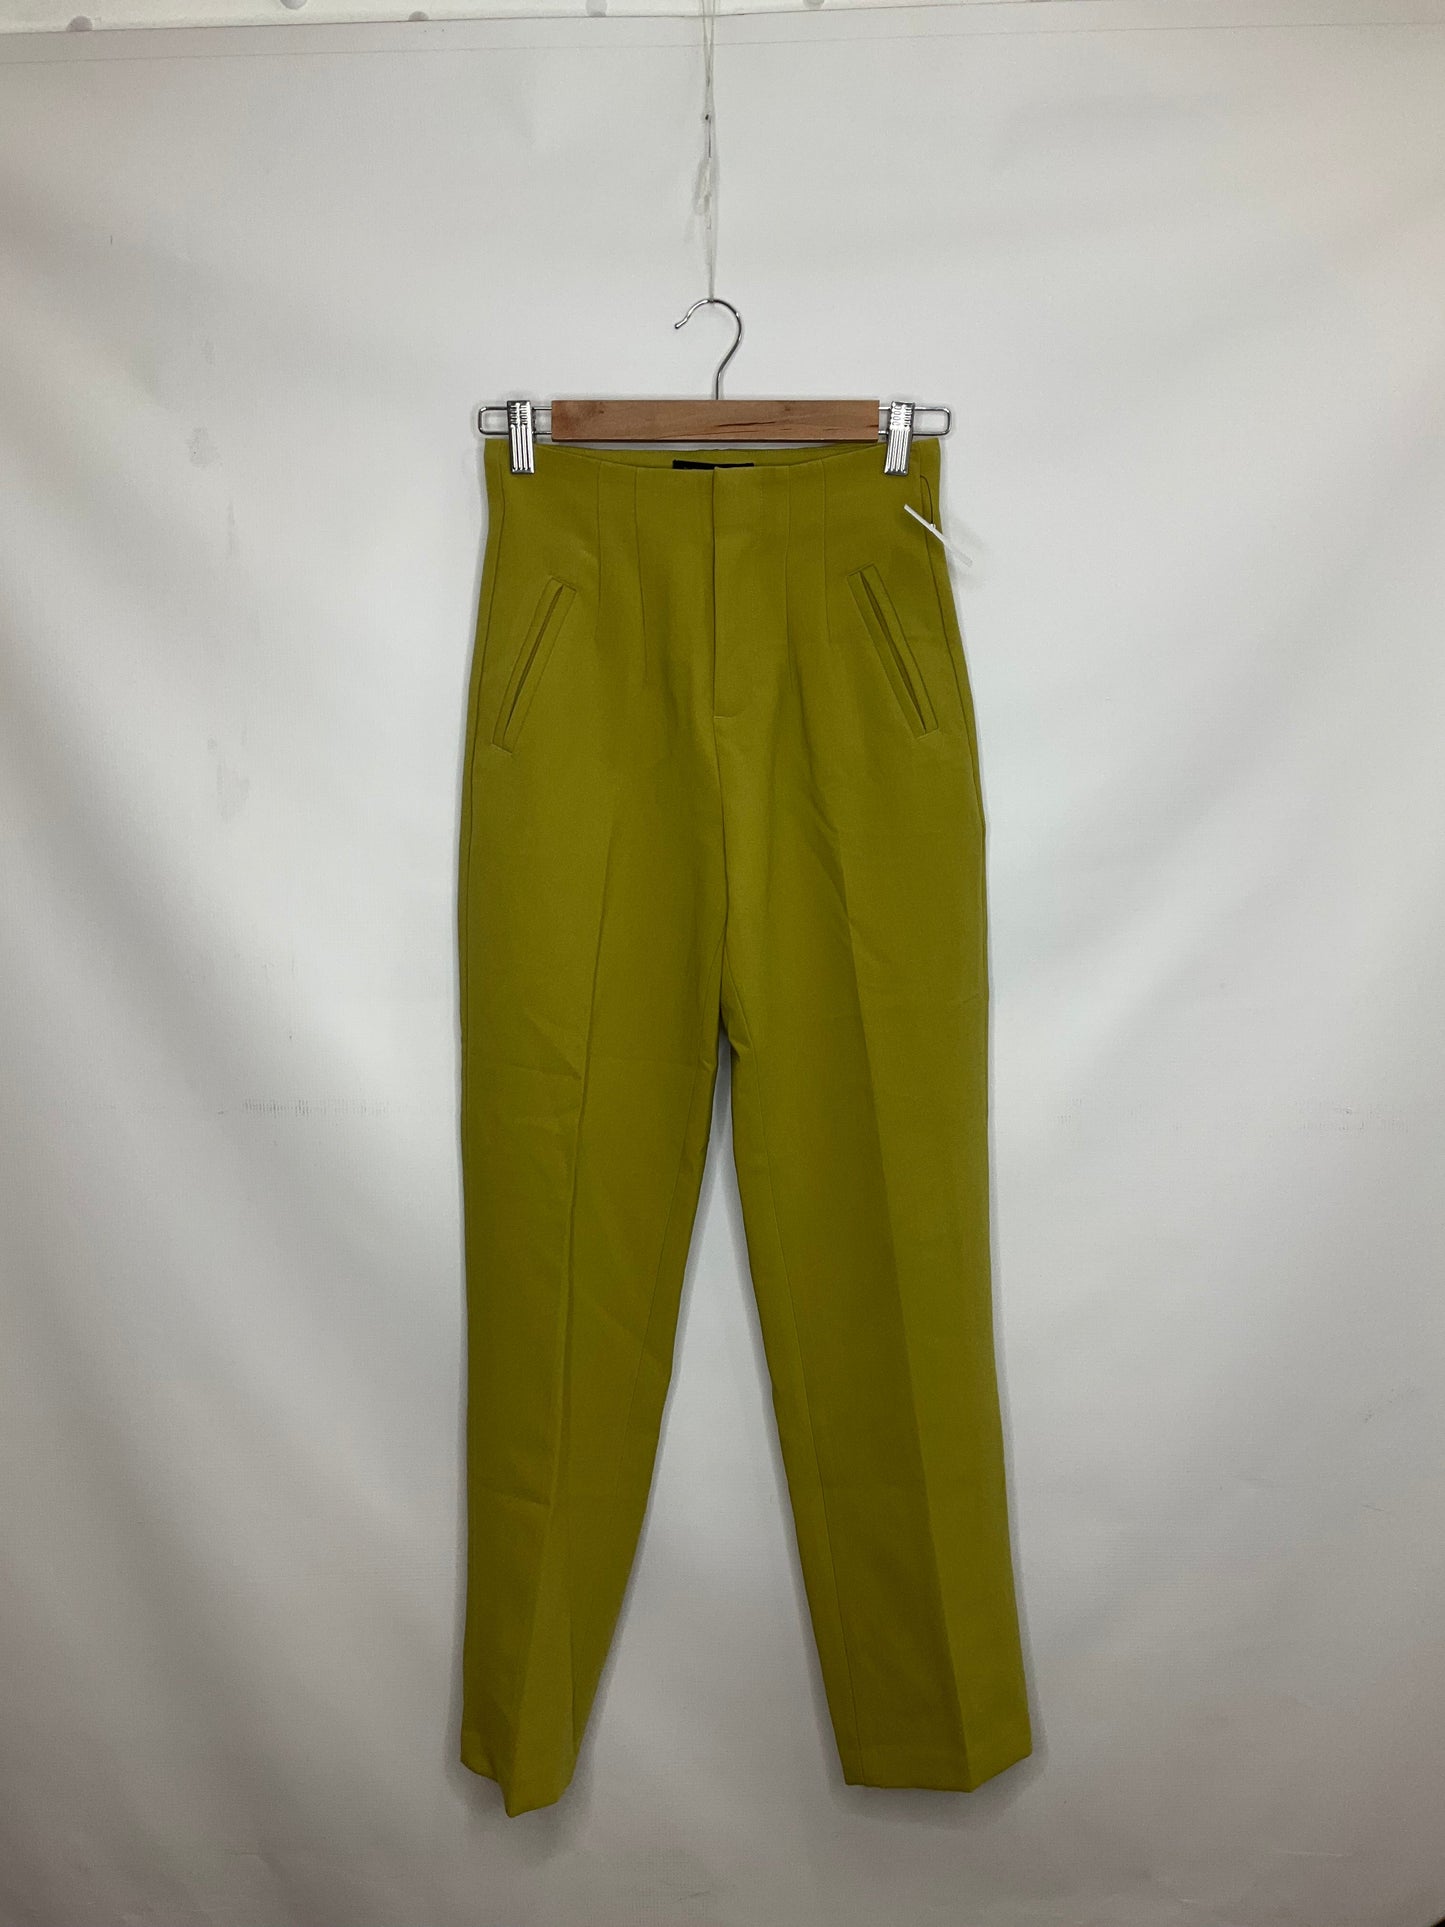 Chartreuse Pants Dress Banana Republic, Size 0